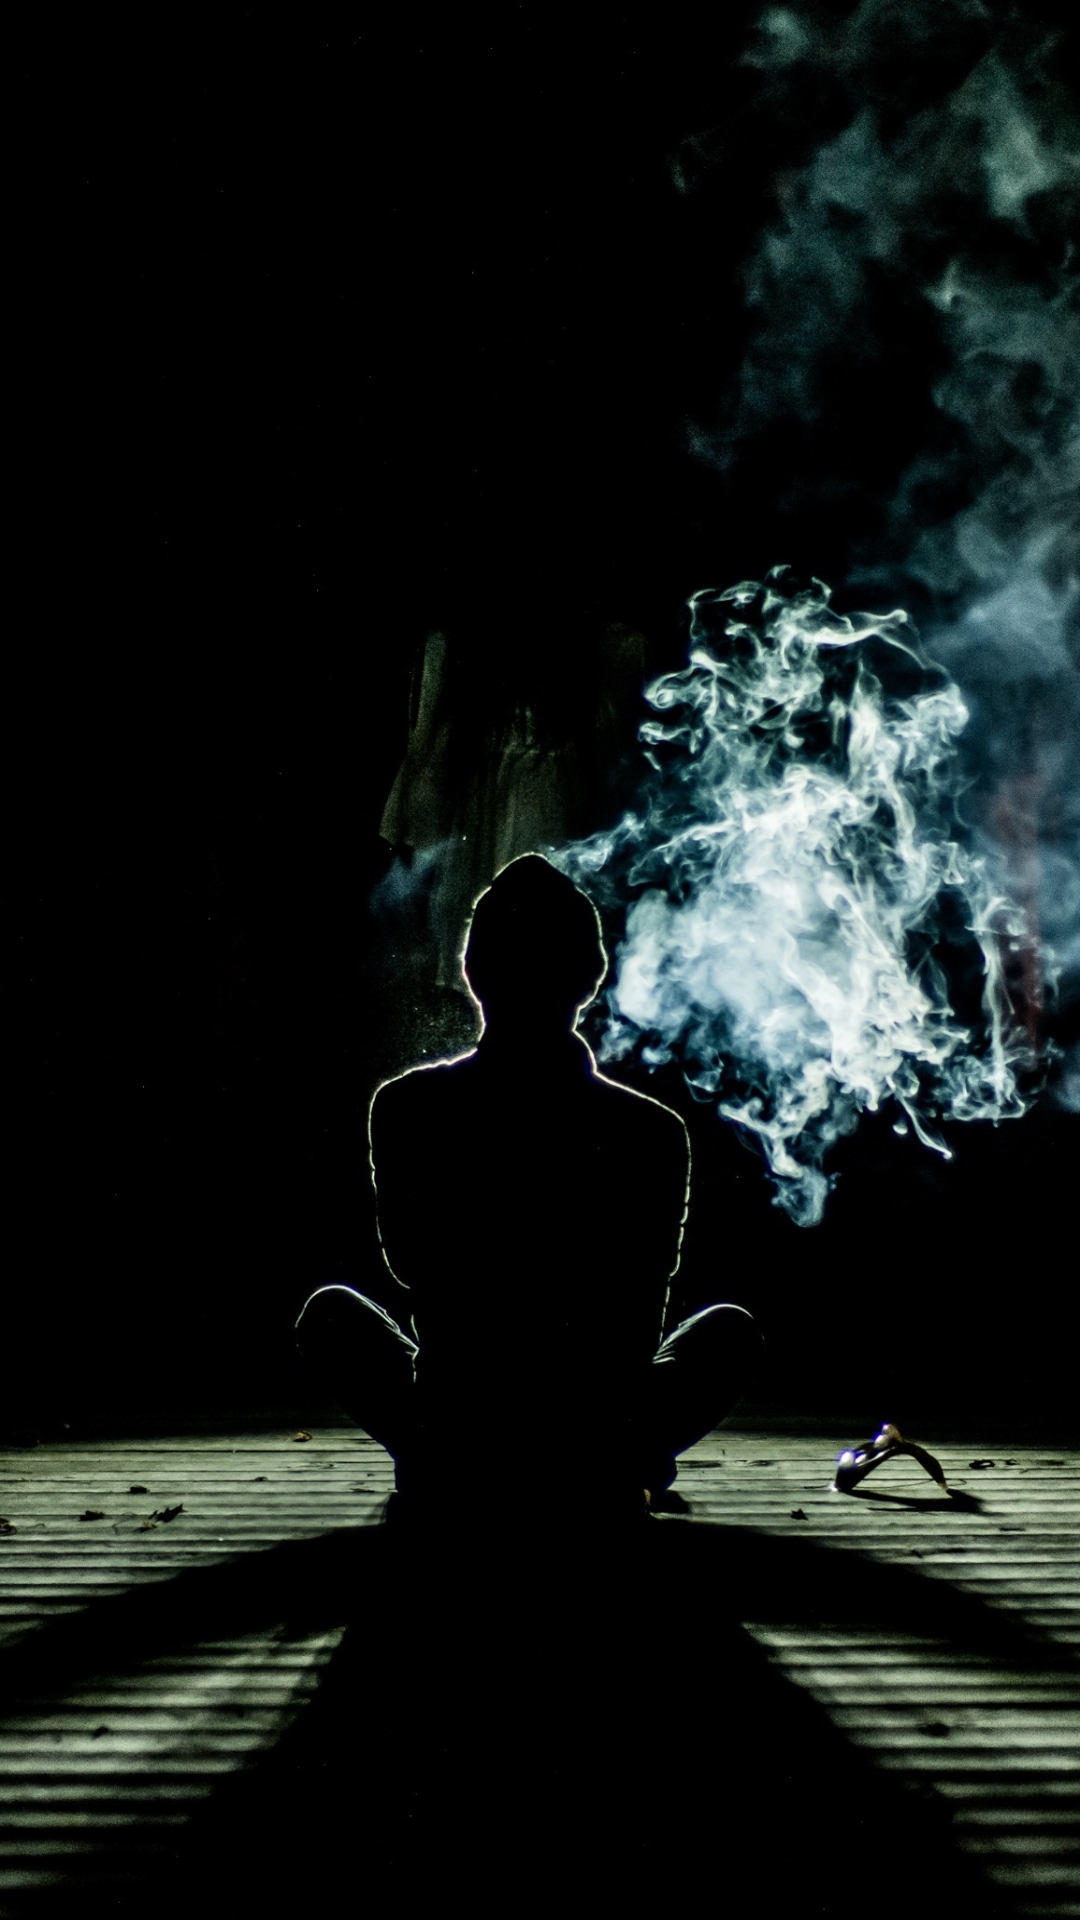 alone, smoke, spiritual, night, meditation, photography, people, silhouette, black QHD